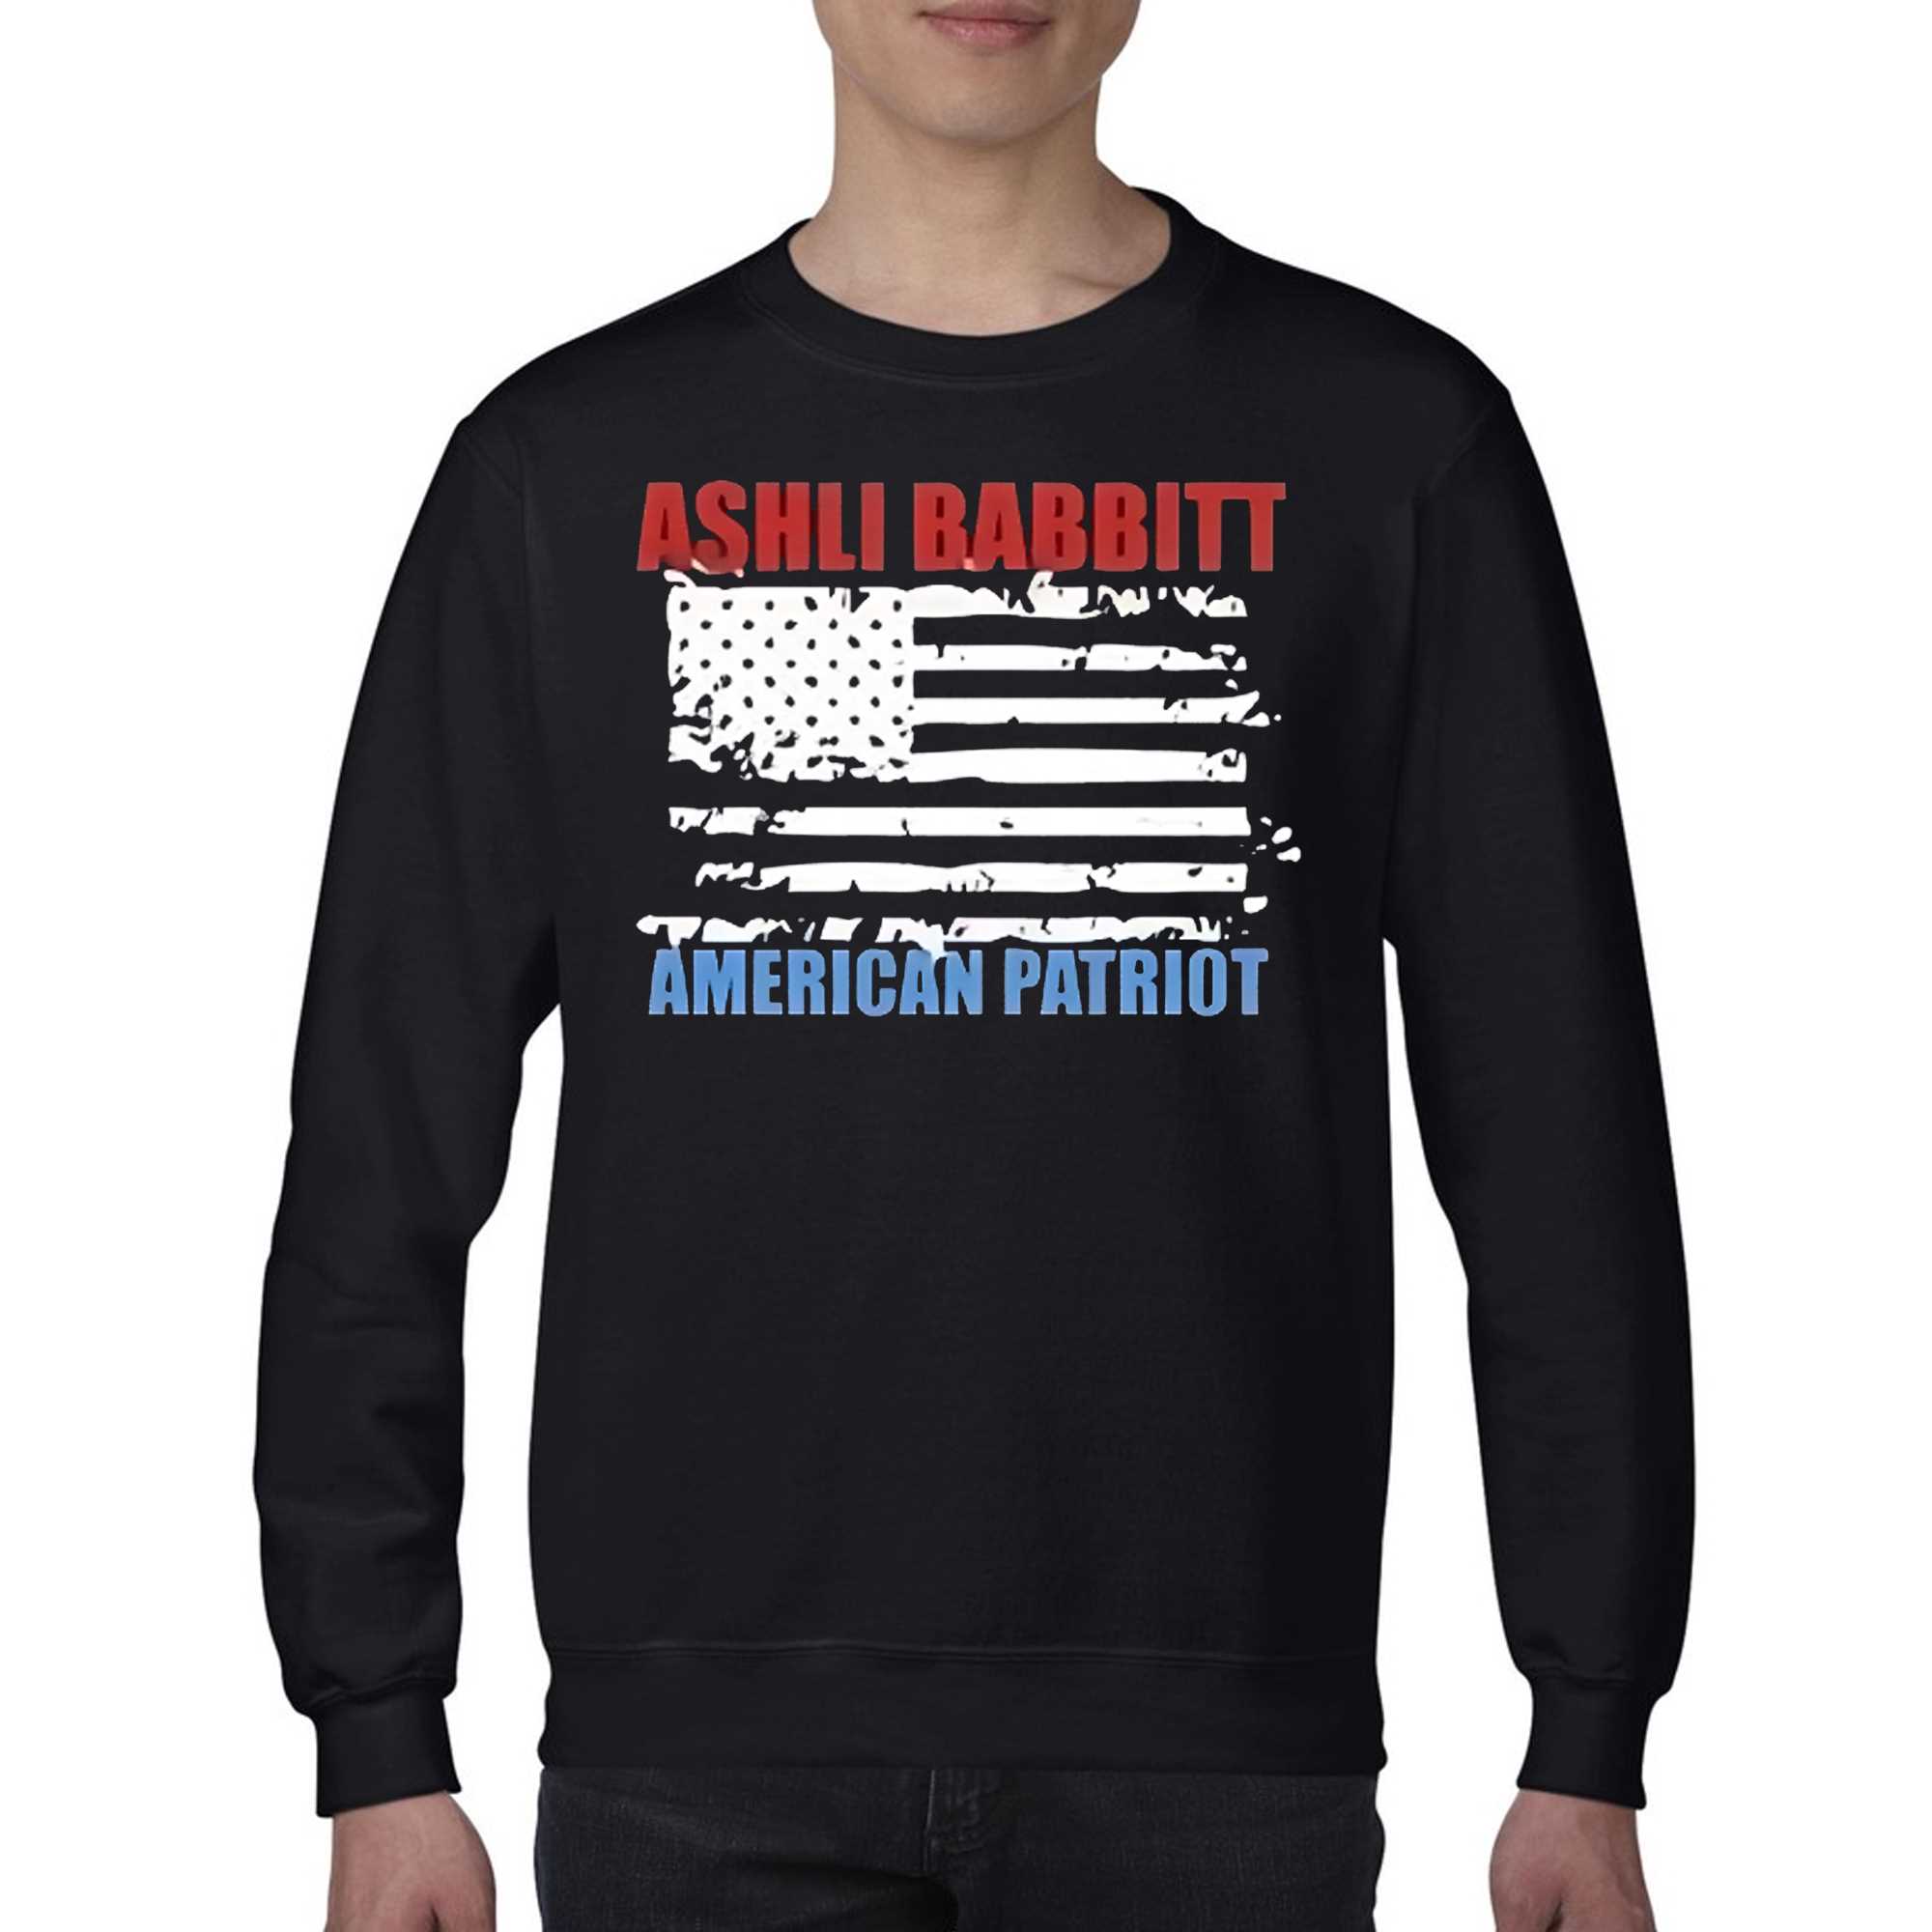 Ashli Babbitt American Patriot T-shirt 